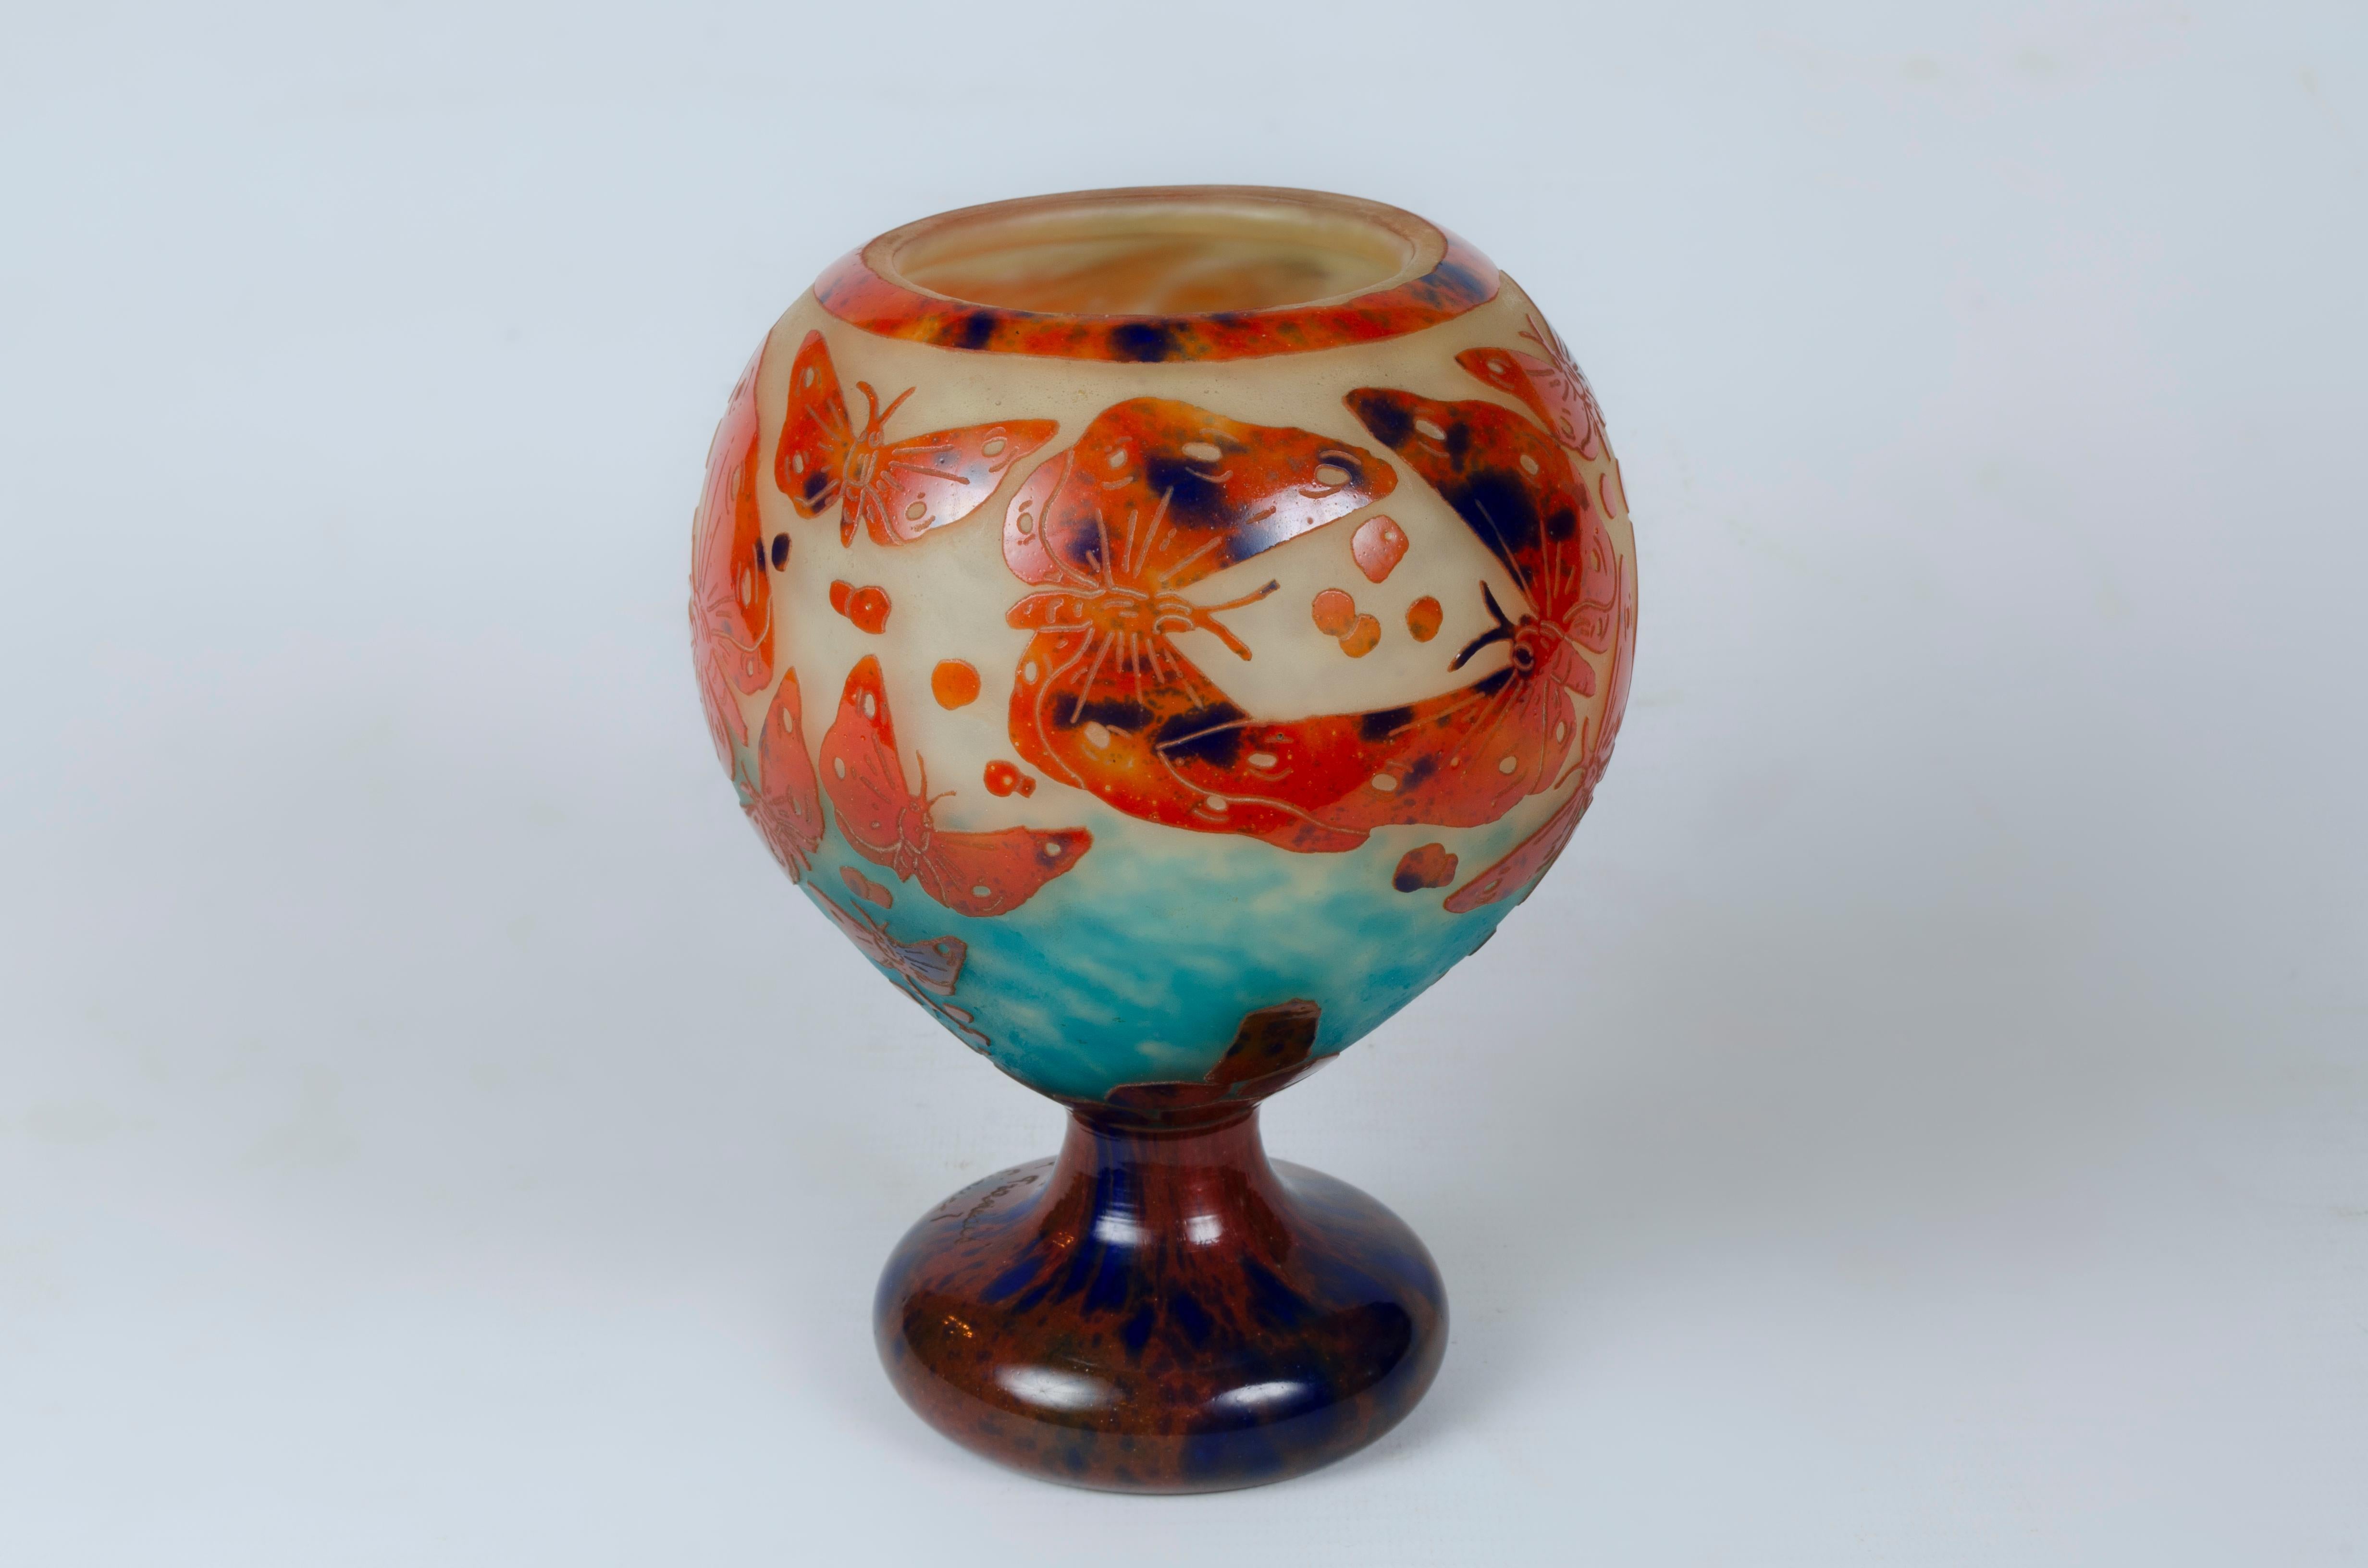 Acid-etched artistic glass vase, “Papillons” model. By Charles Schneide (1881-1953). Signature Le Verre Français.

Charles Schneider, Le Verre Français - Charder, 